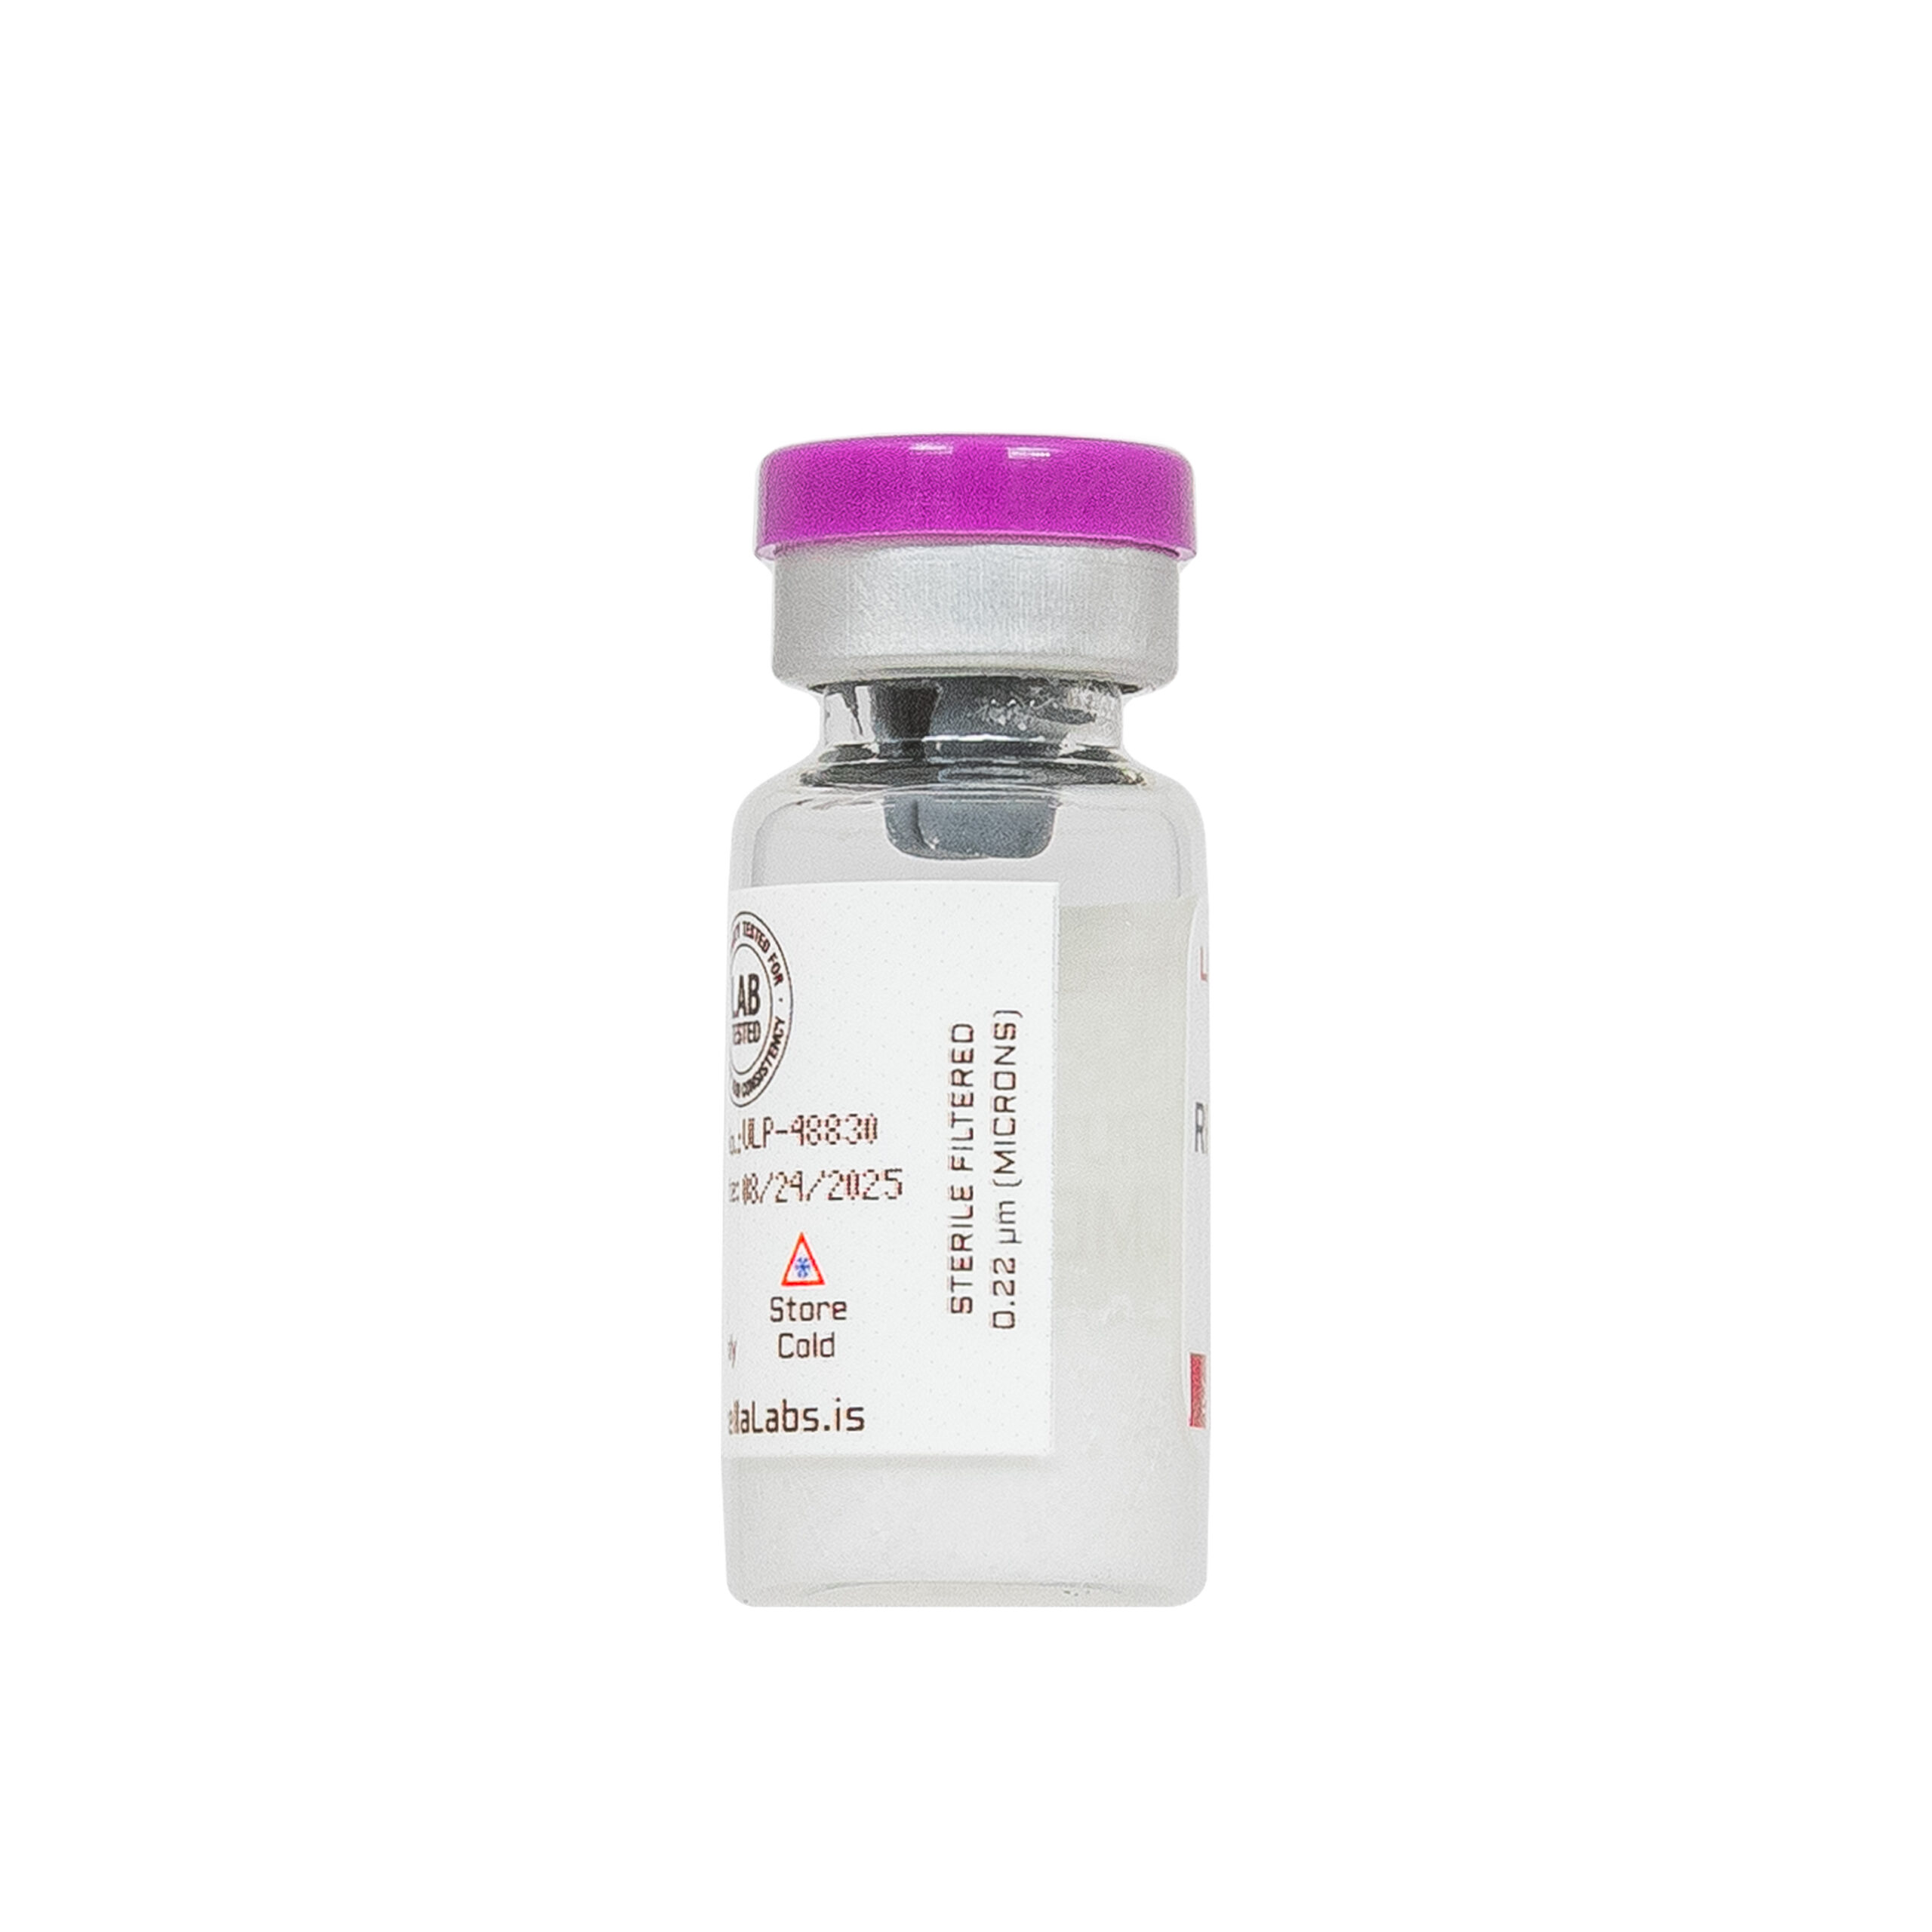 retatrutide (ly 3437943) peptide 2mg/5mg/10mg vial